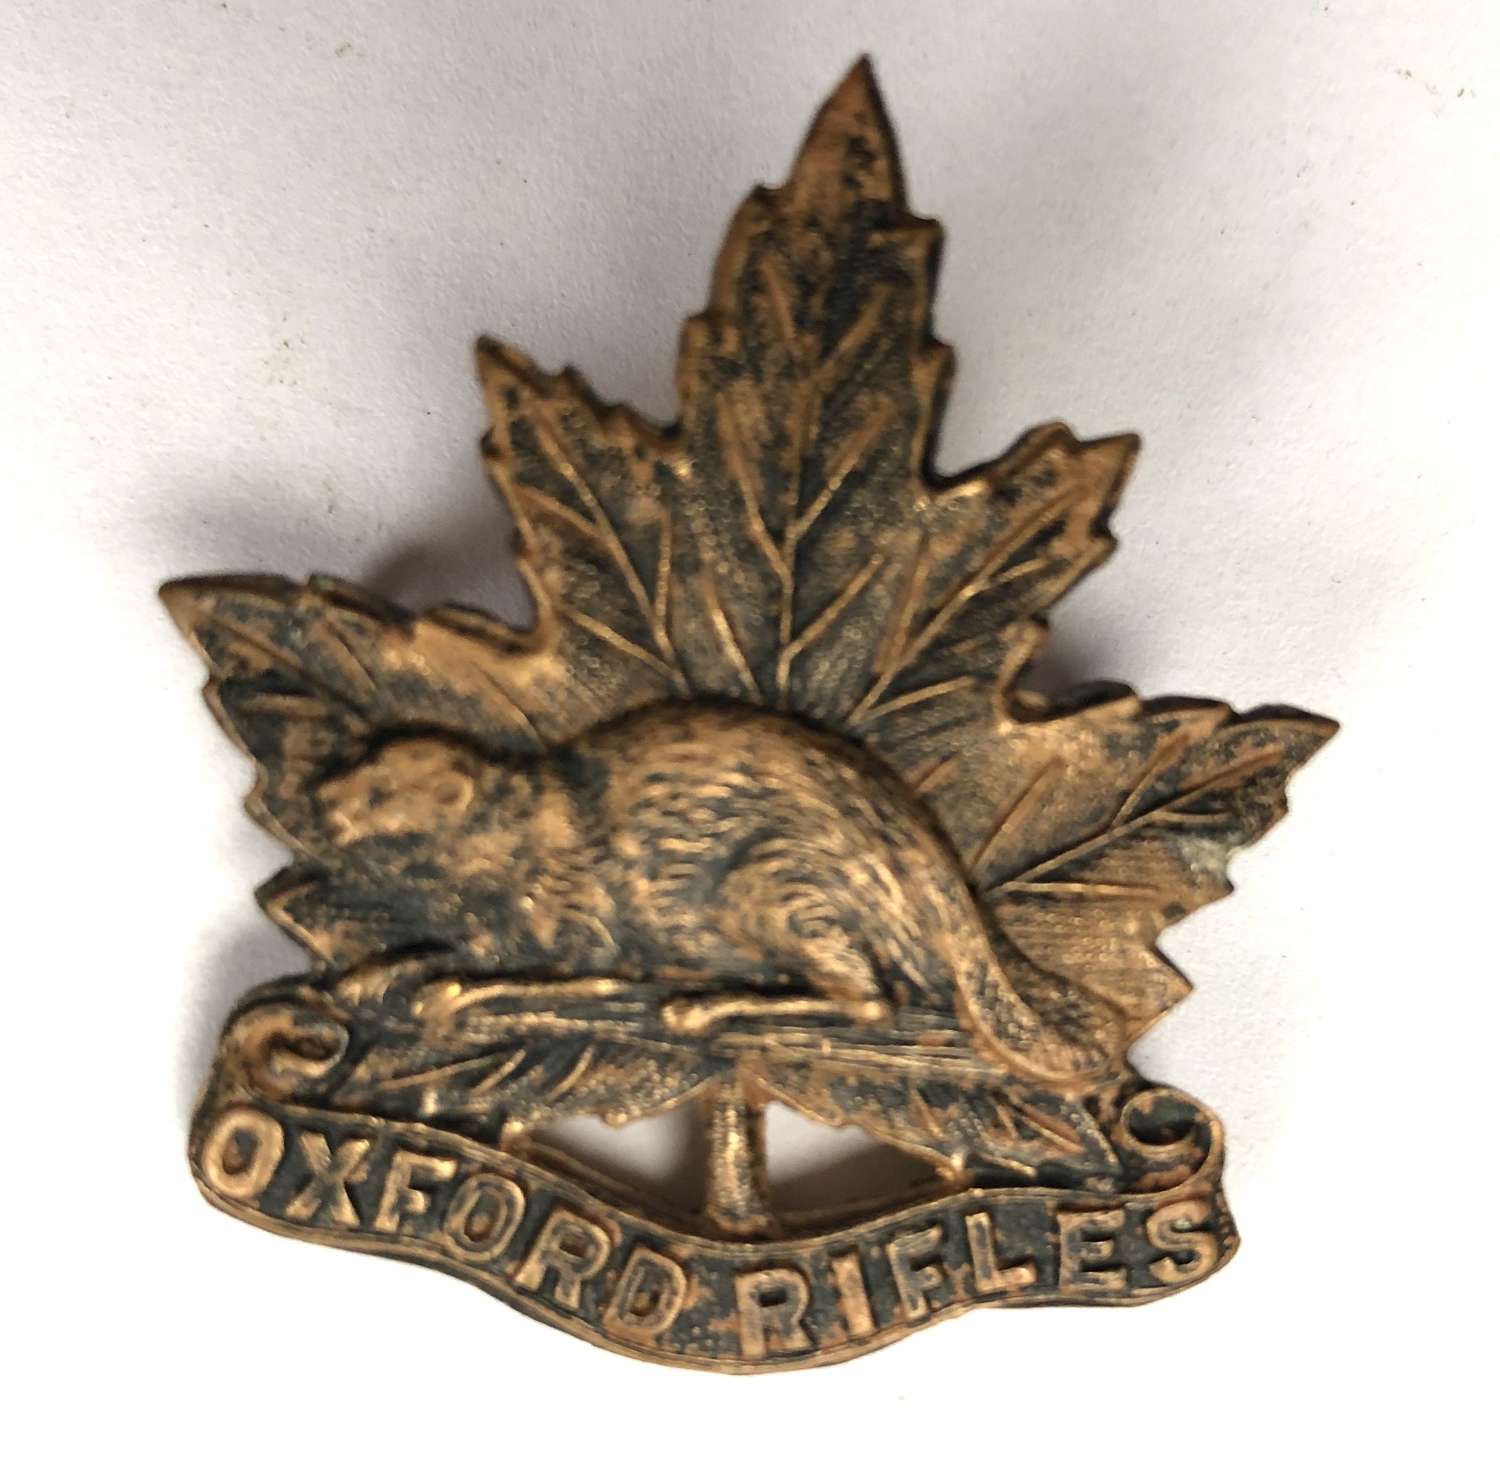 Canada. The Oxford Rifles cap badge